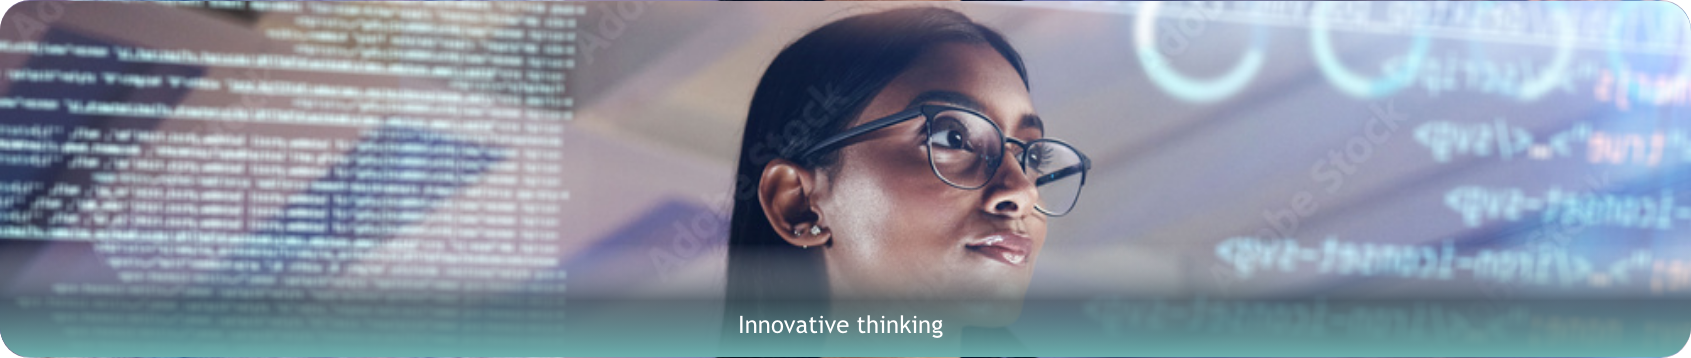 Innovative thinking banner